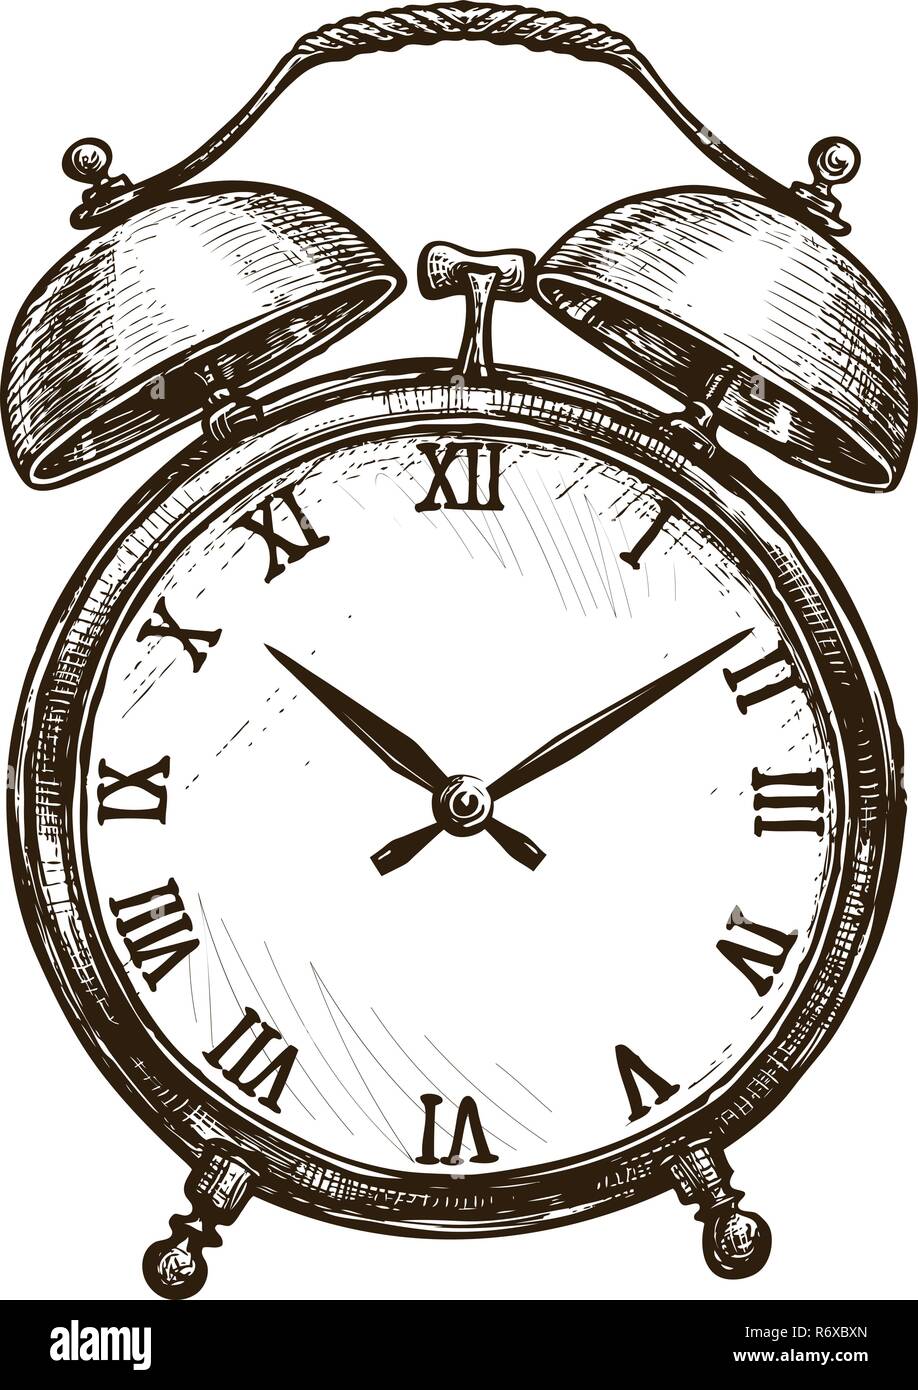 Vintage alarm clock. Time concept. Sketch vector illustration Stock Vector